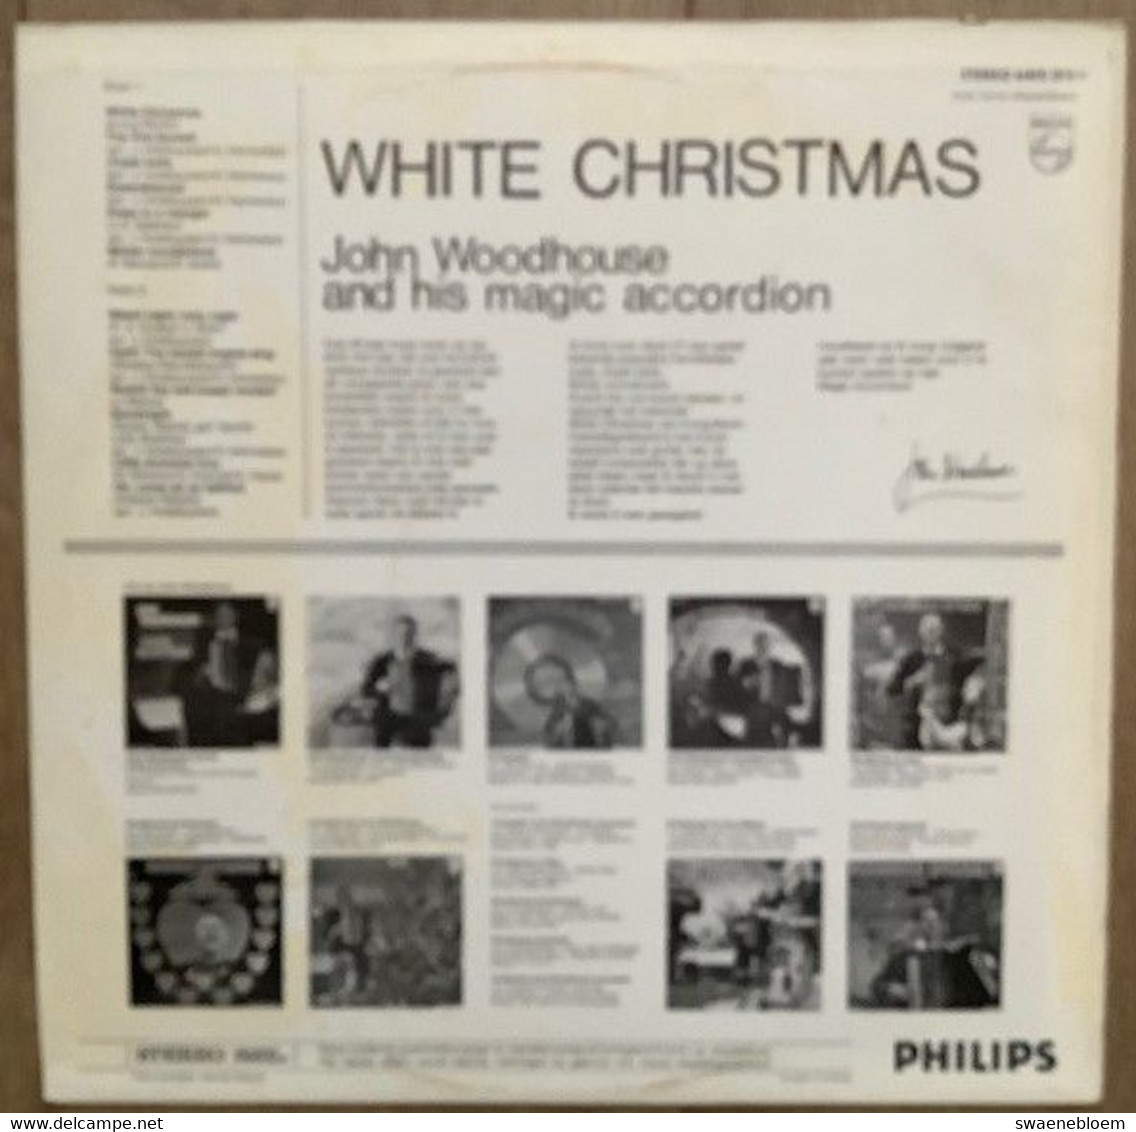 LP.- WHITE CHRISTMAS. JOHN WOODHOUSE & HIS MAGIC ACCORDION - Canzoni Di Natale